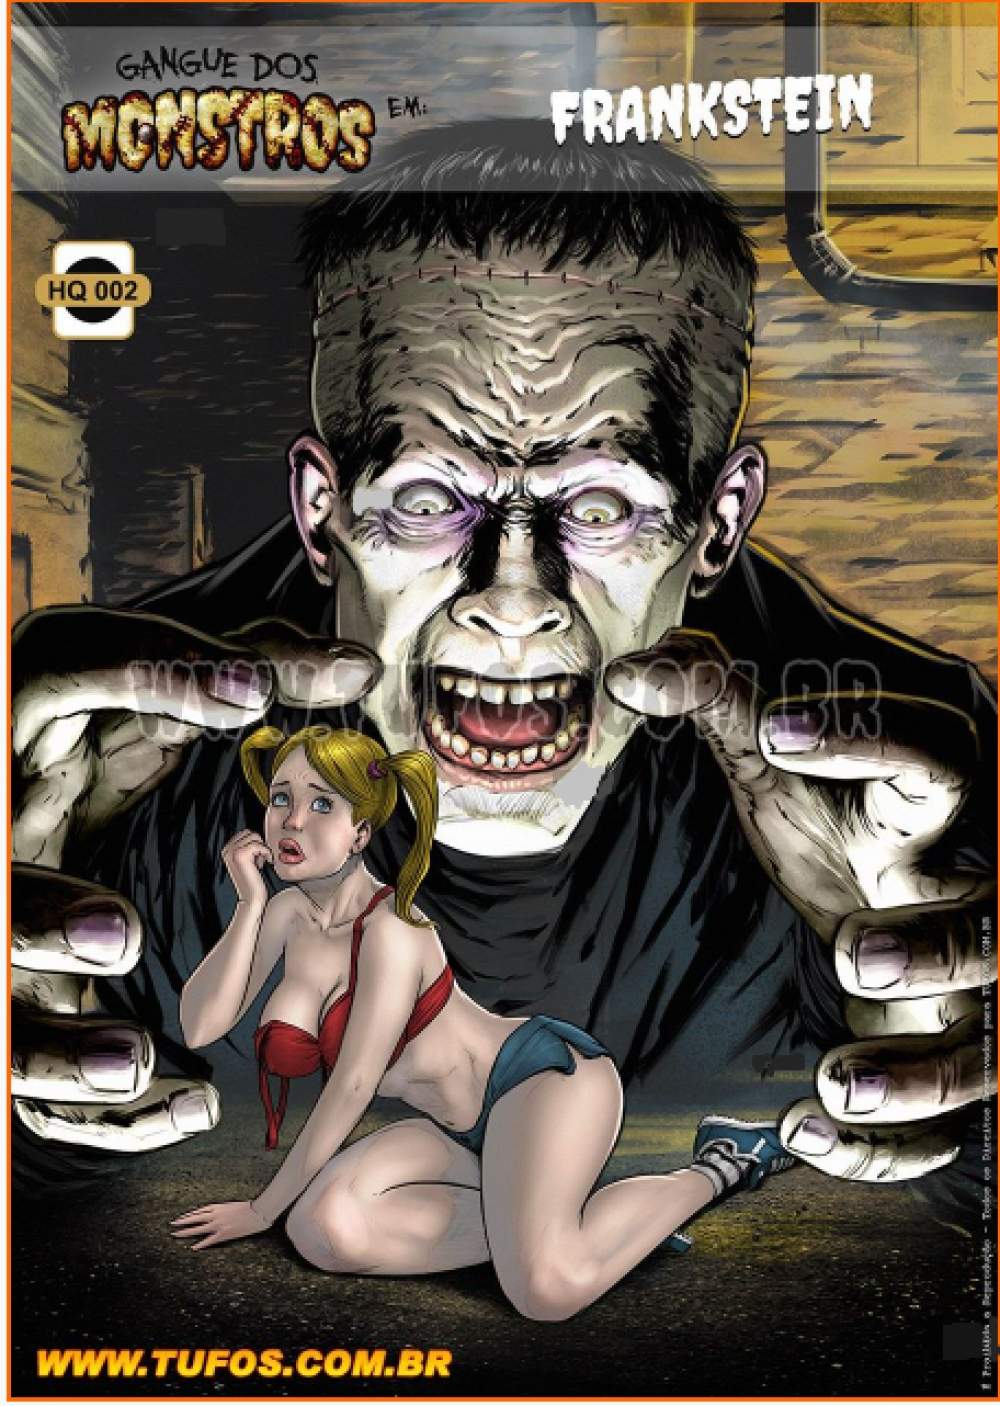 SureFap xxx porno Frankenstein - [Tufos] - Gangue Dos Monstros 2 - Monster Squad 2: Monstros-Frankstein